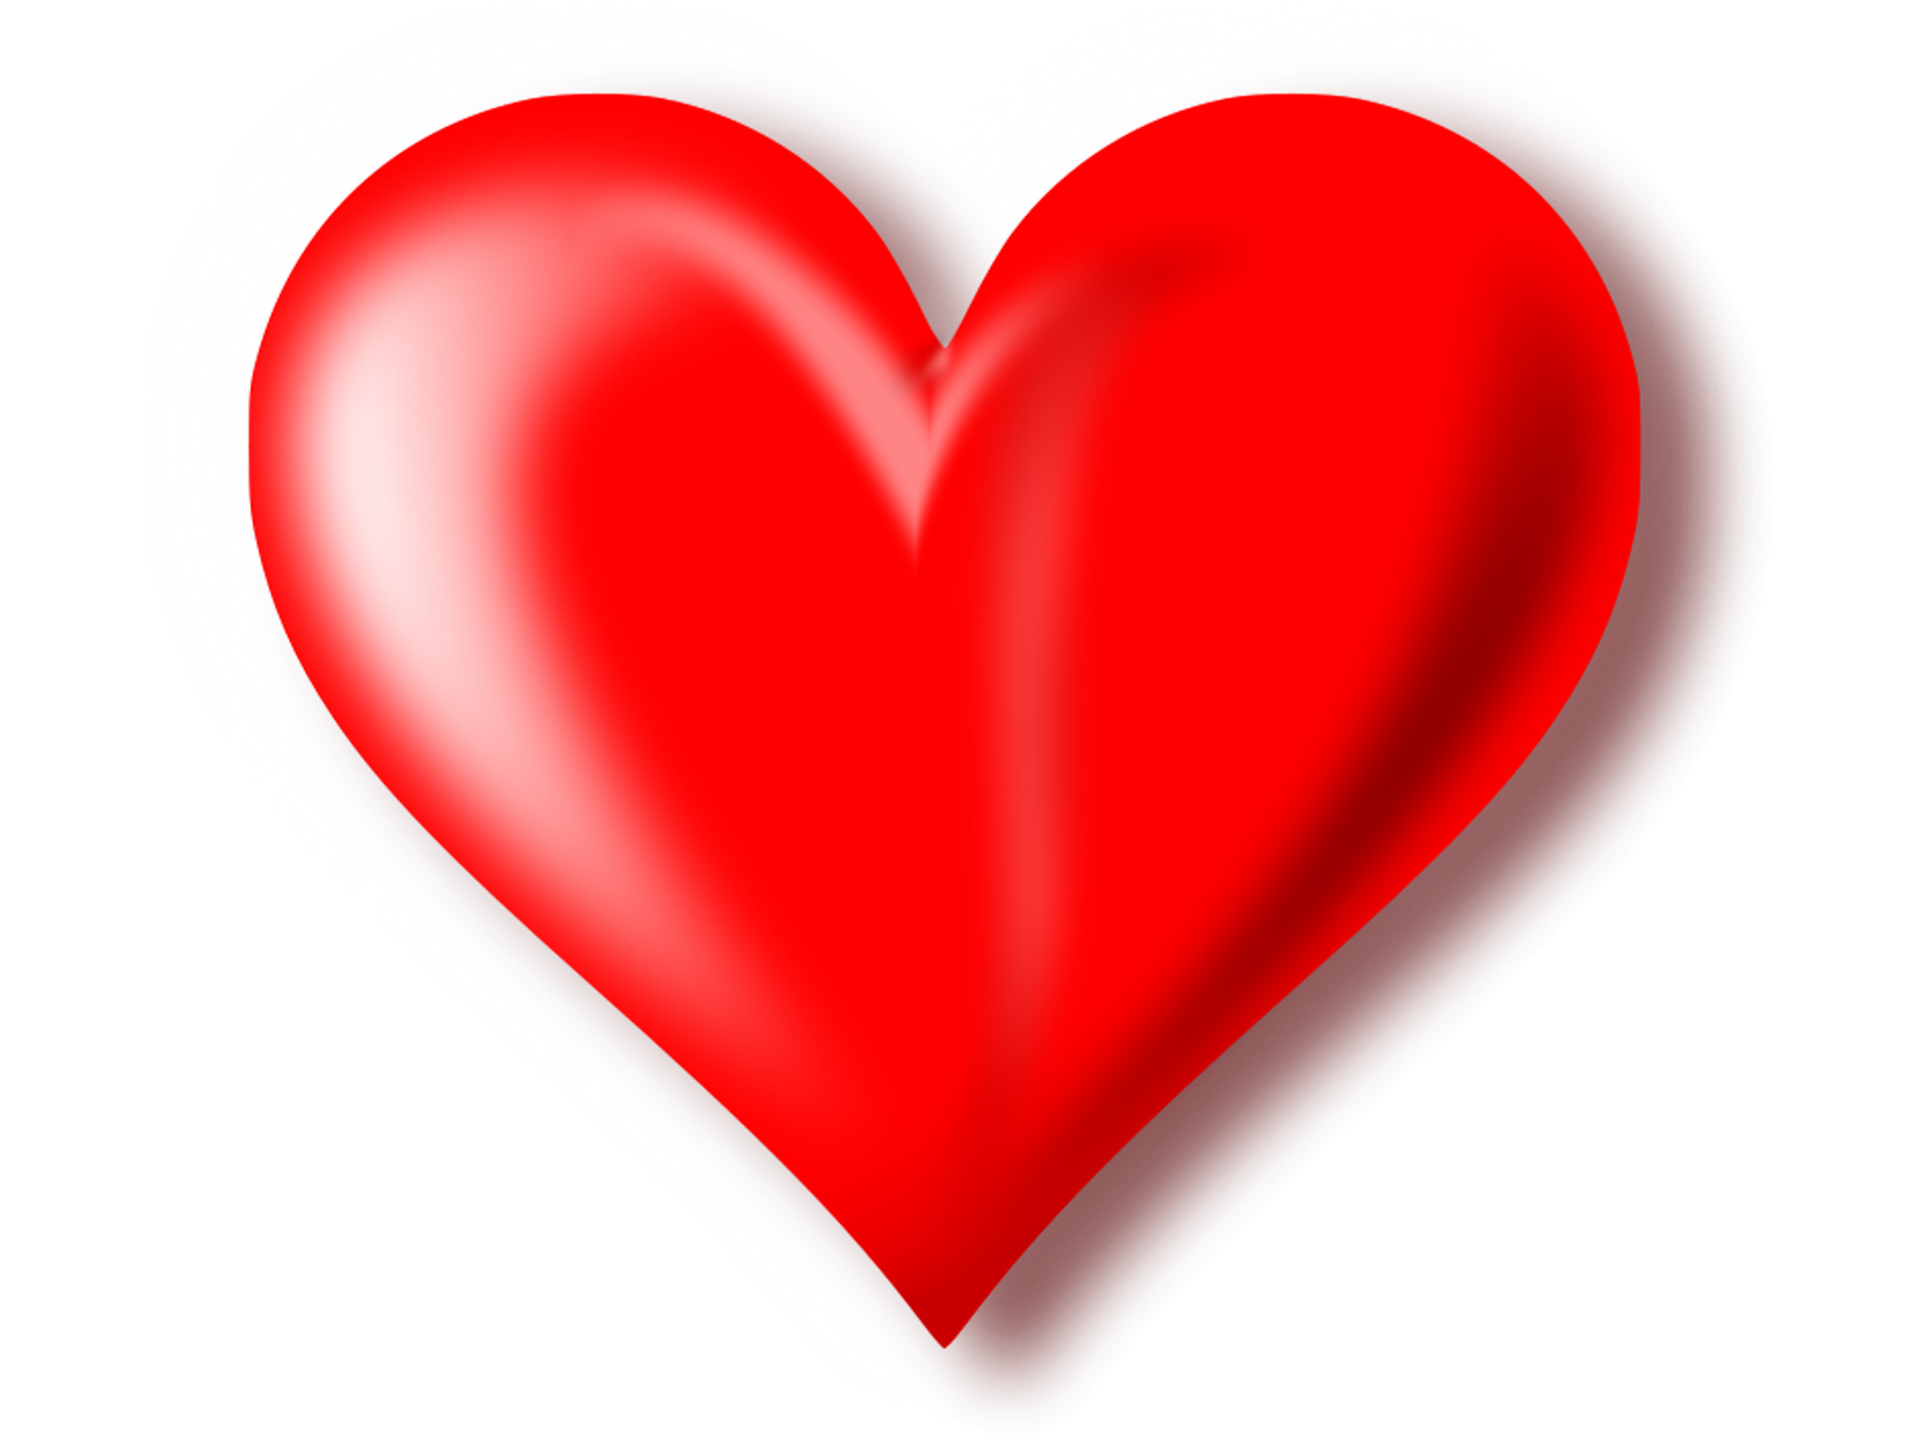 Red Heart Emoji PNG Image